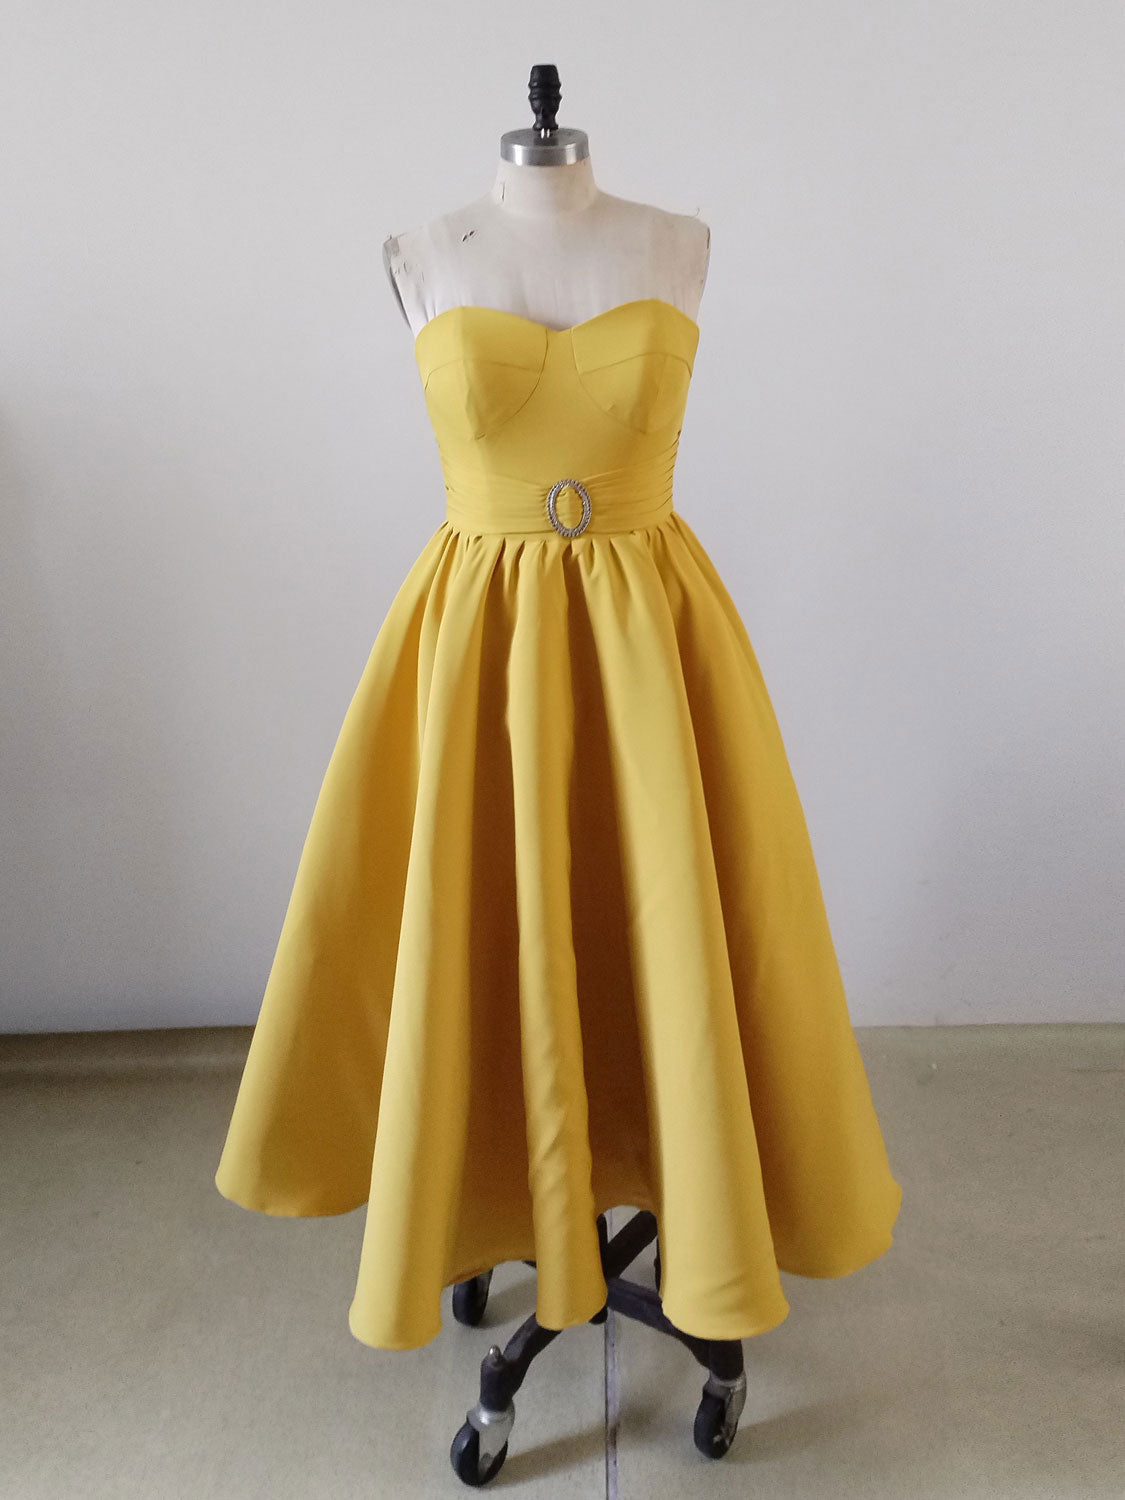 Yellow Sweetheart Neck Satin Tea Length Corset Prom Dress, Yellow Corset Formal Dress outfit, Beauty Dress Design